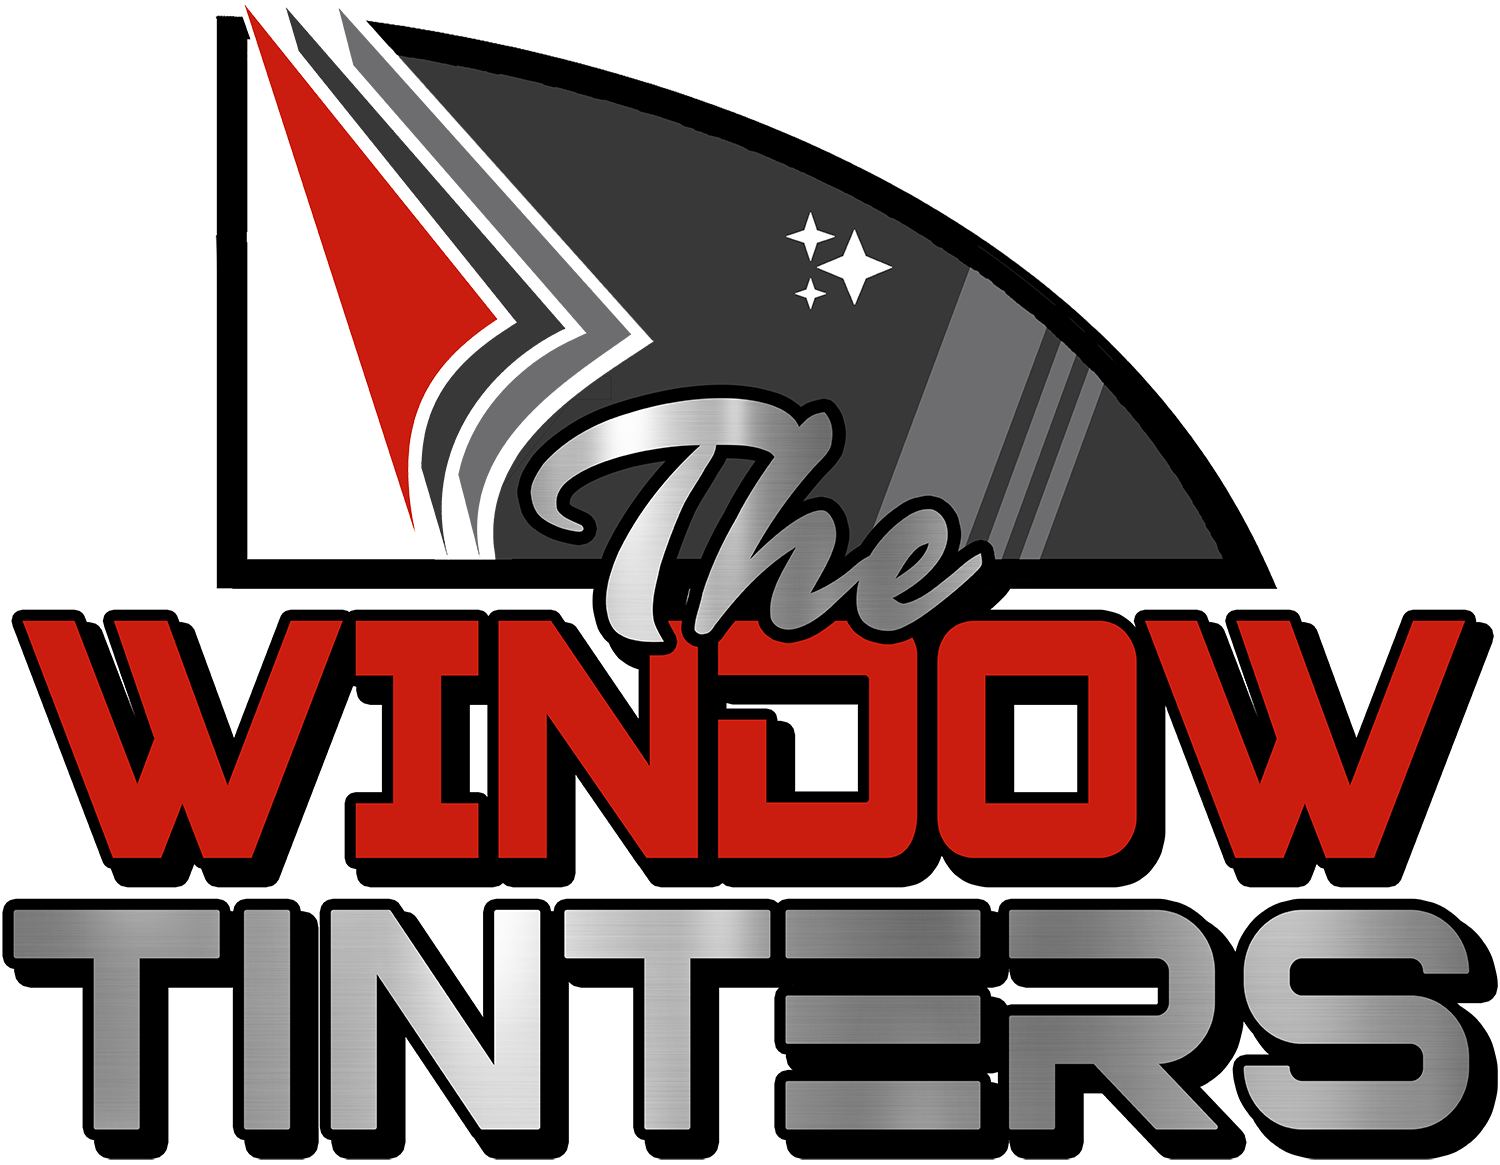 The Window Tinters